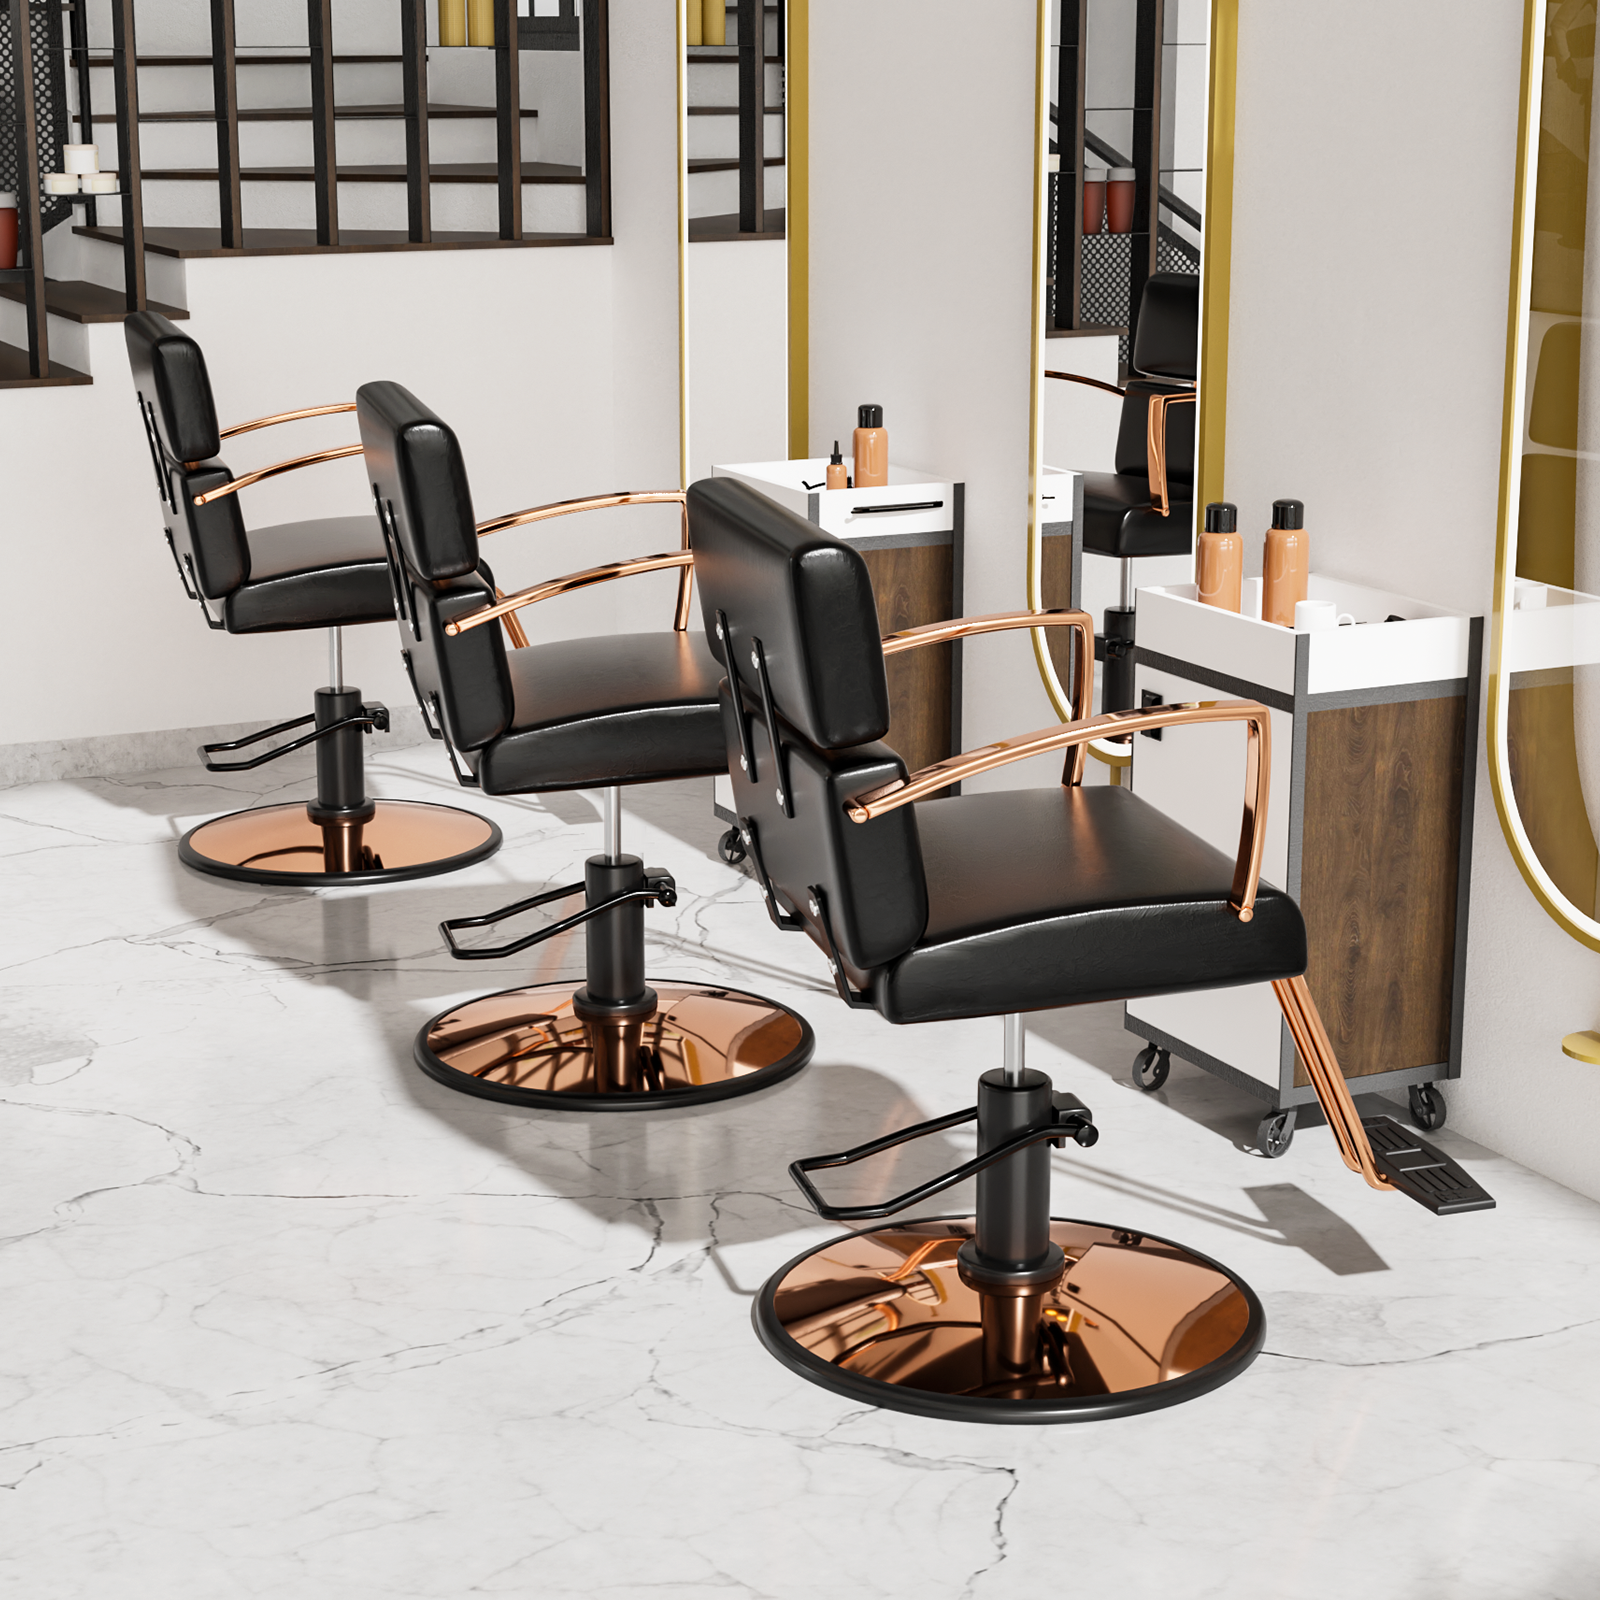 OmySalon SC01 Hydraulic 360-Degree Swivel Hair Stylist Salon Chair Black/White/Pink/Rose Gold/Purple